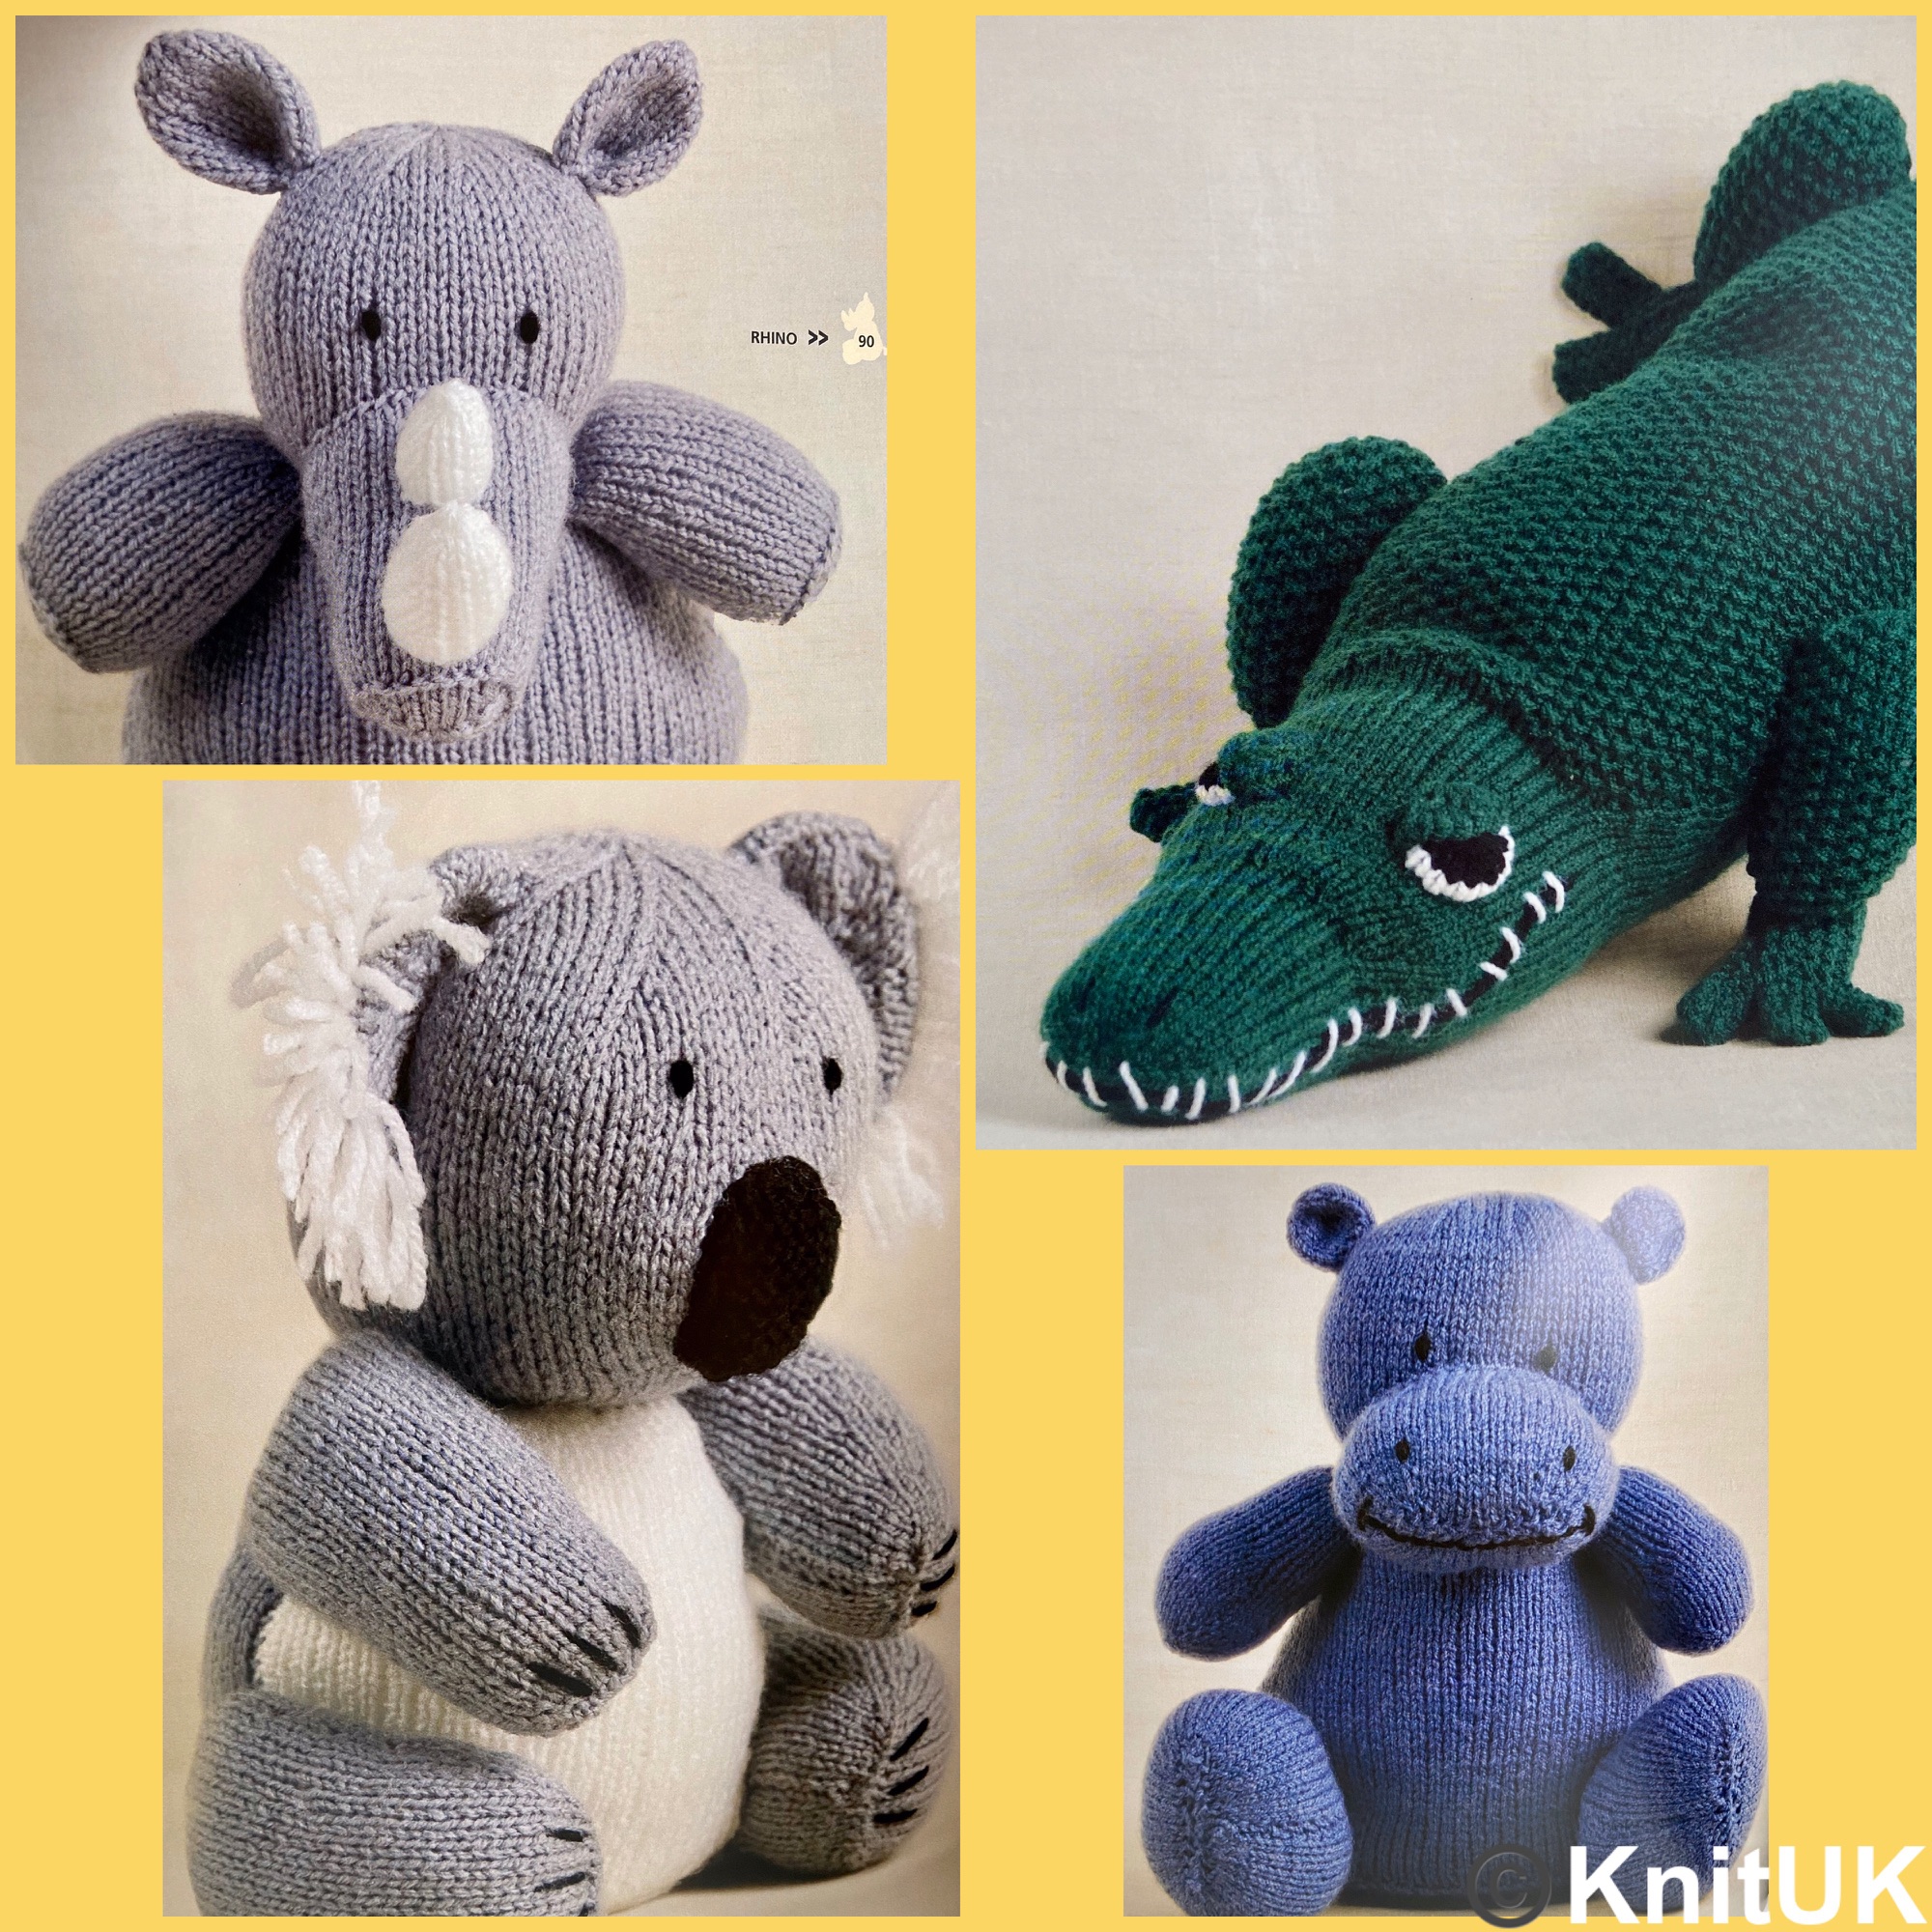 Gmc knitted wild animal rhino alligator koala hippo designs Sarah Keen book